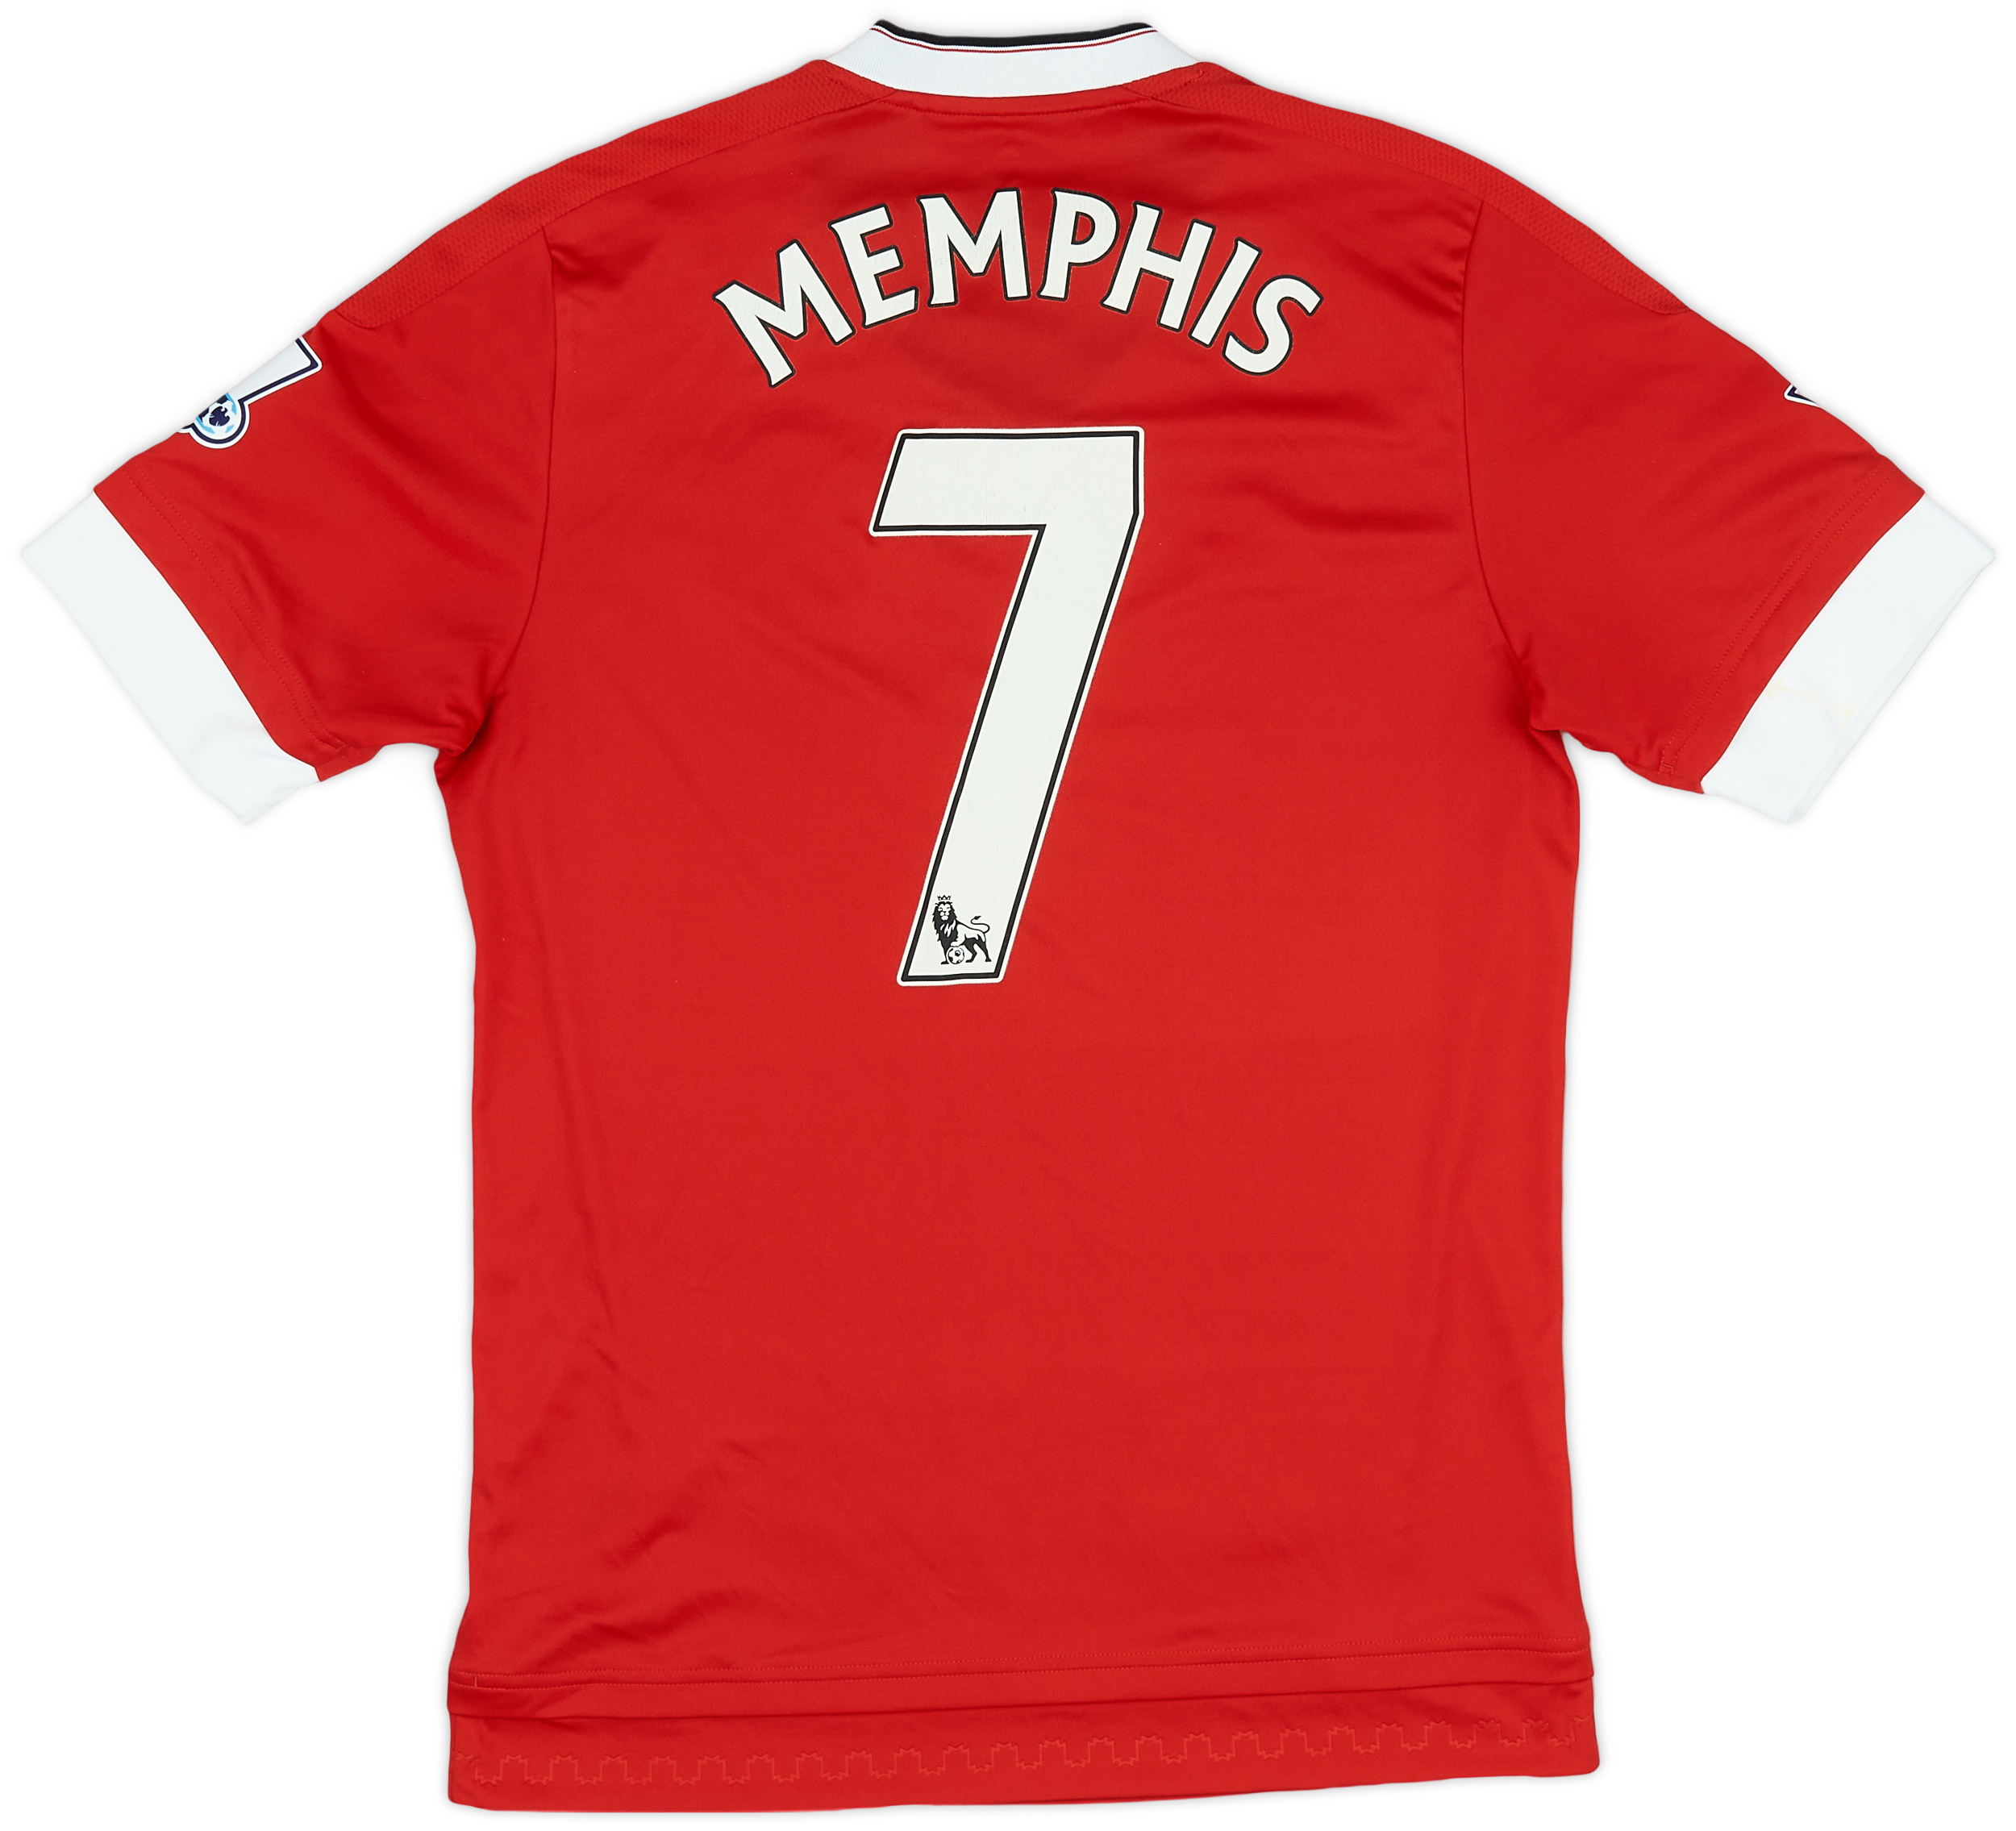 2015-16 Manchester United Home Shirt Memphis #7 - 7/10 - (S)